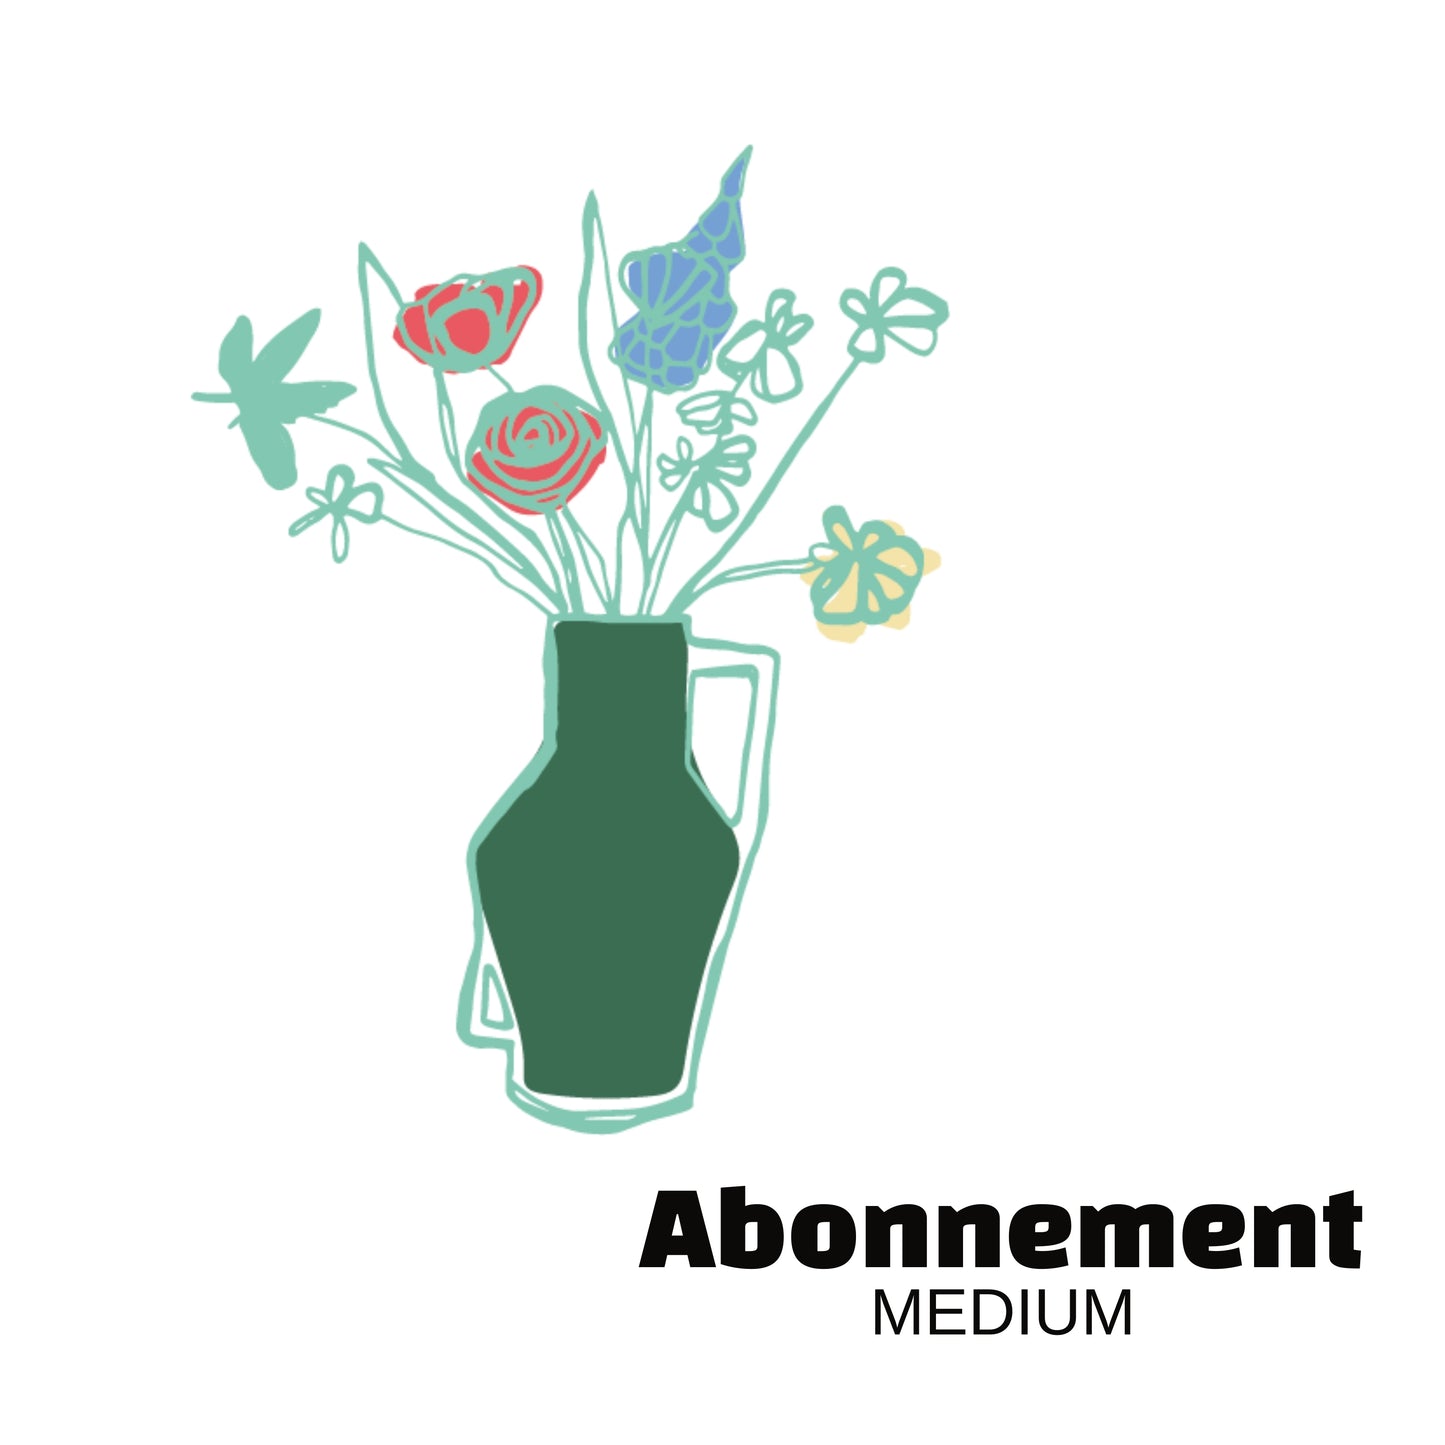 Reflower Medium Abonnement | €20 per maand